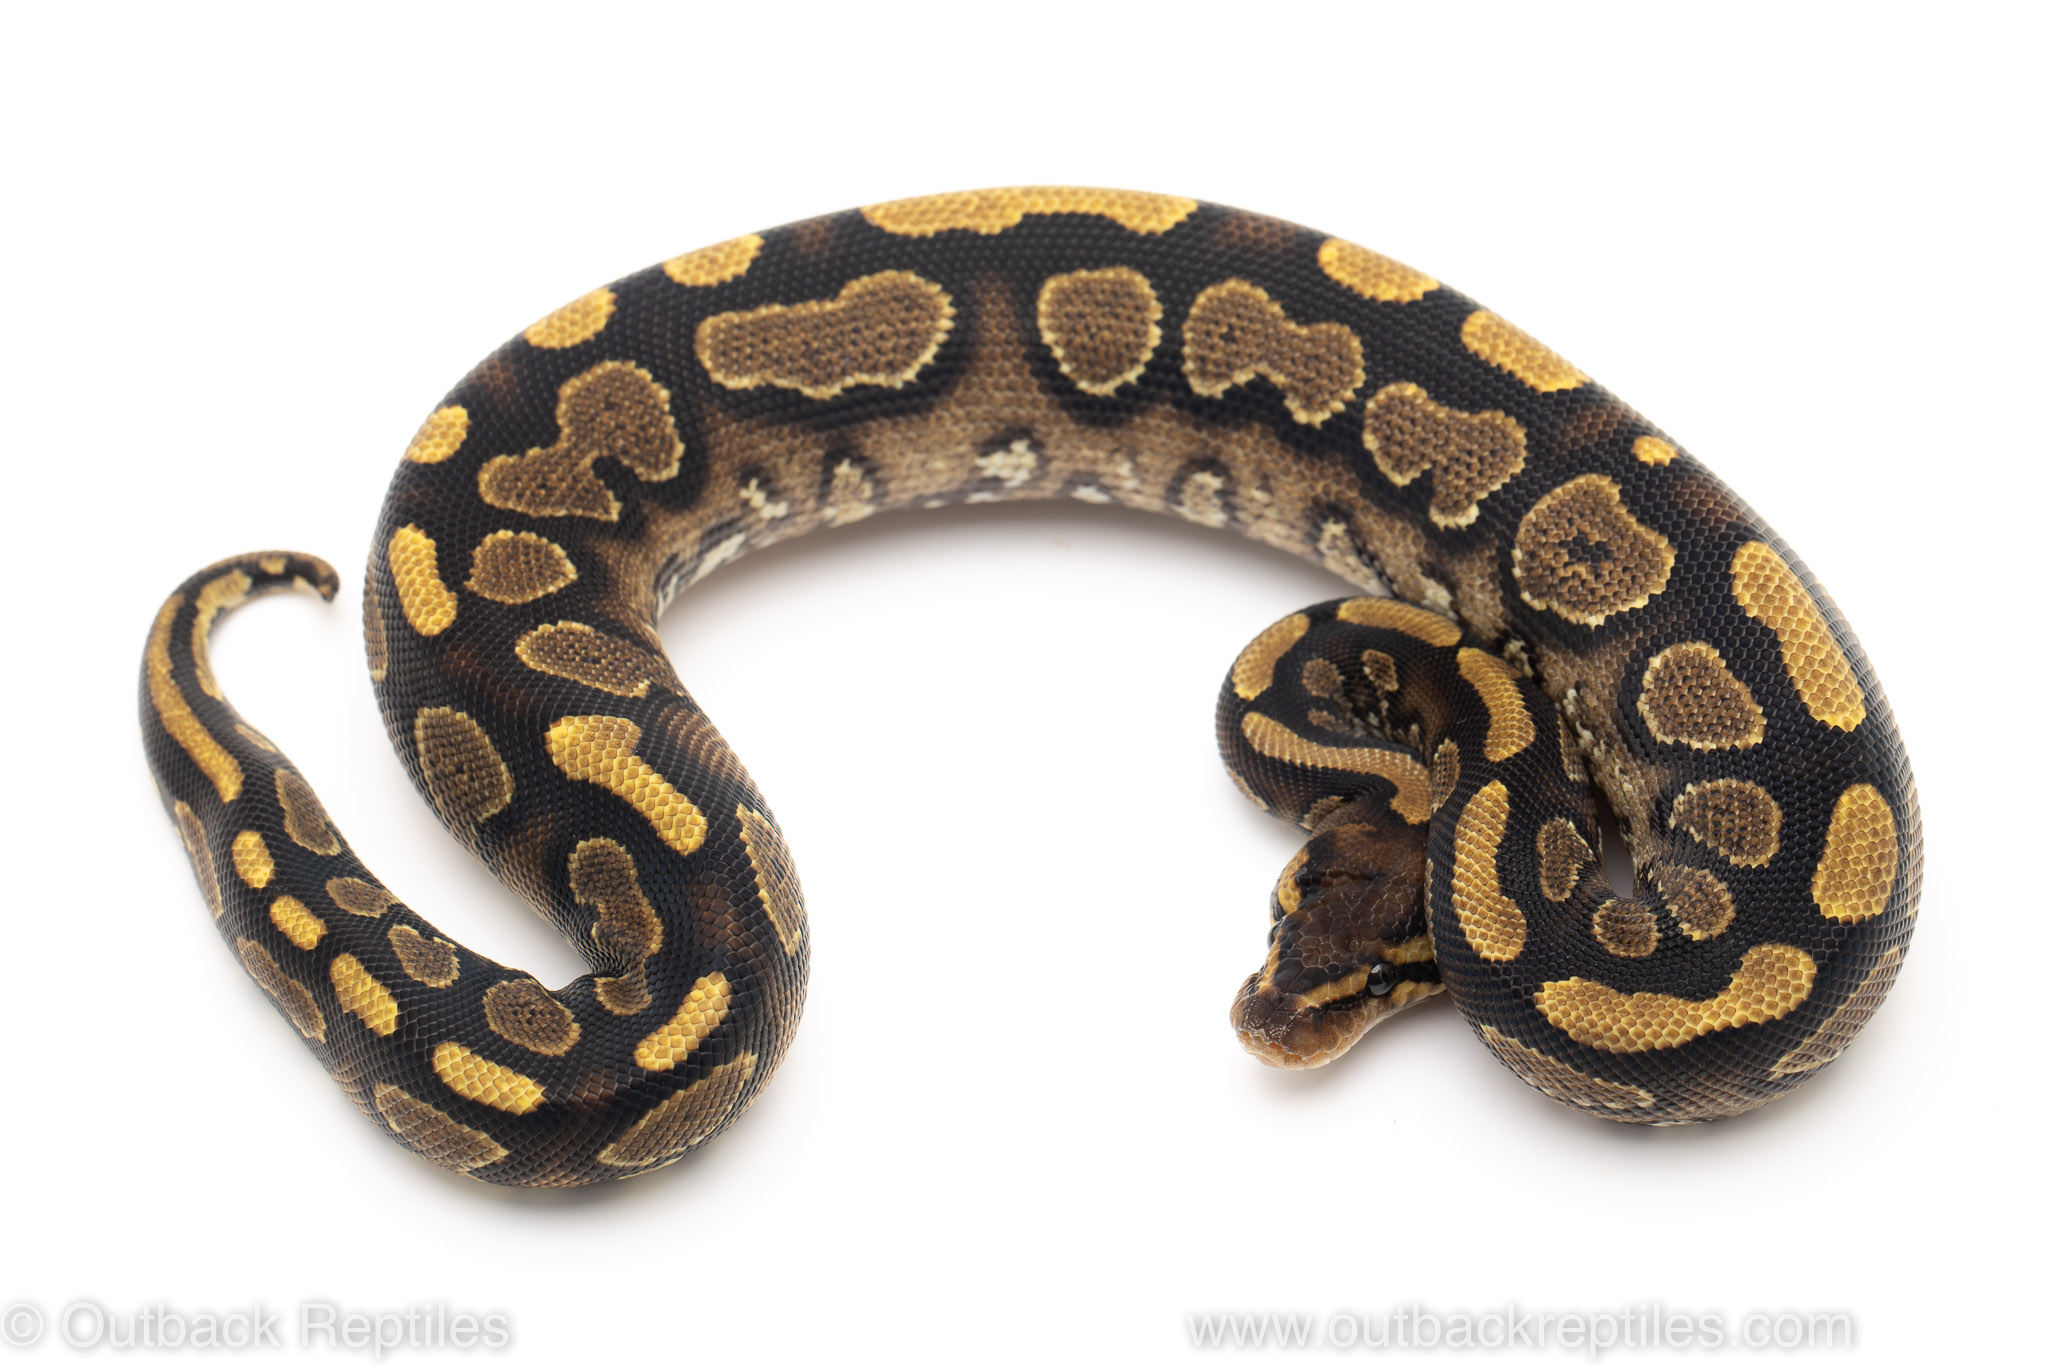 YB Mahogany ball python for sale